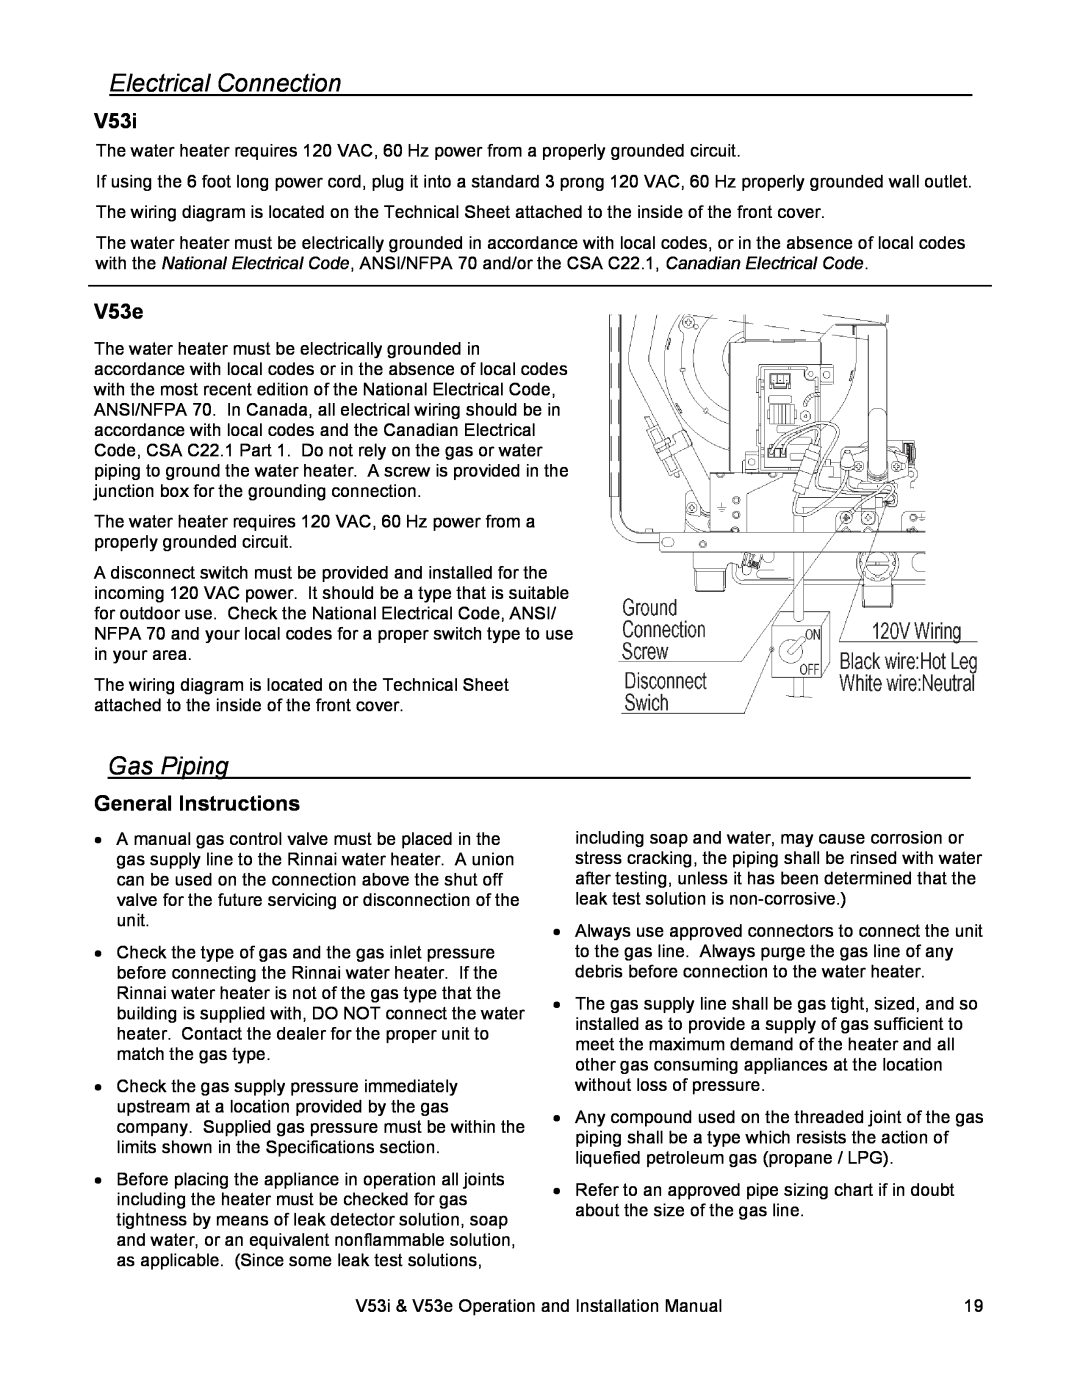 Rinnai V53I, V53E installation manual Electrical Connection, Gas Piping, V53i, V53e, General Instructions 